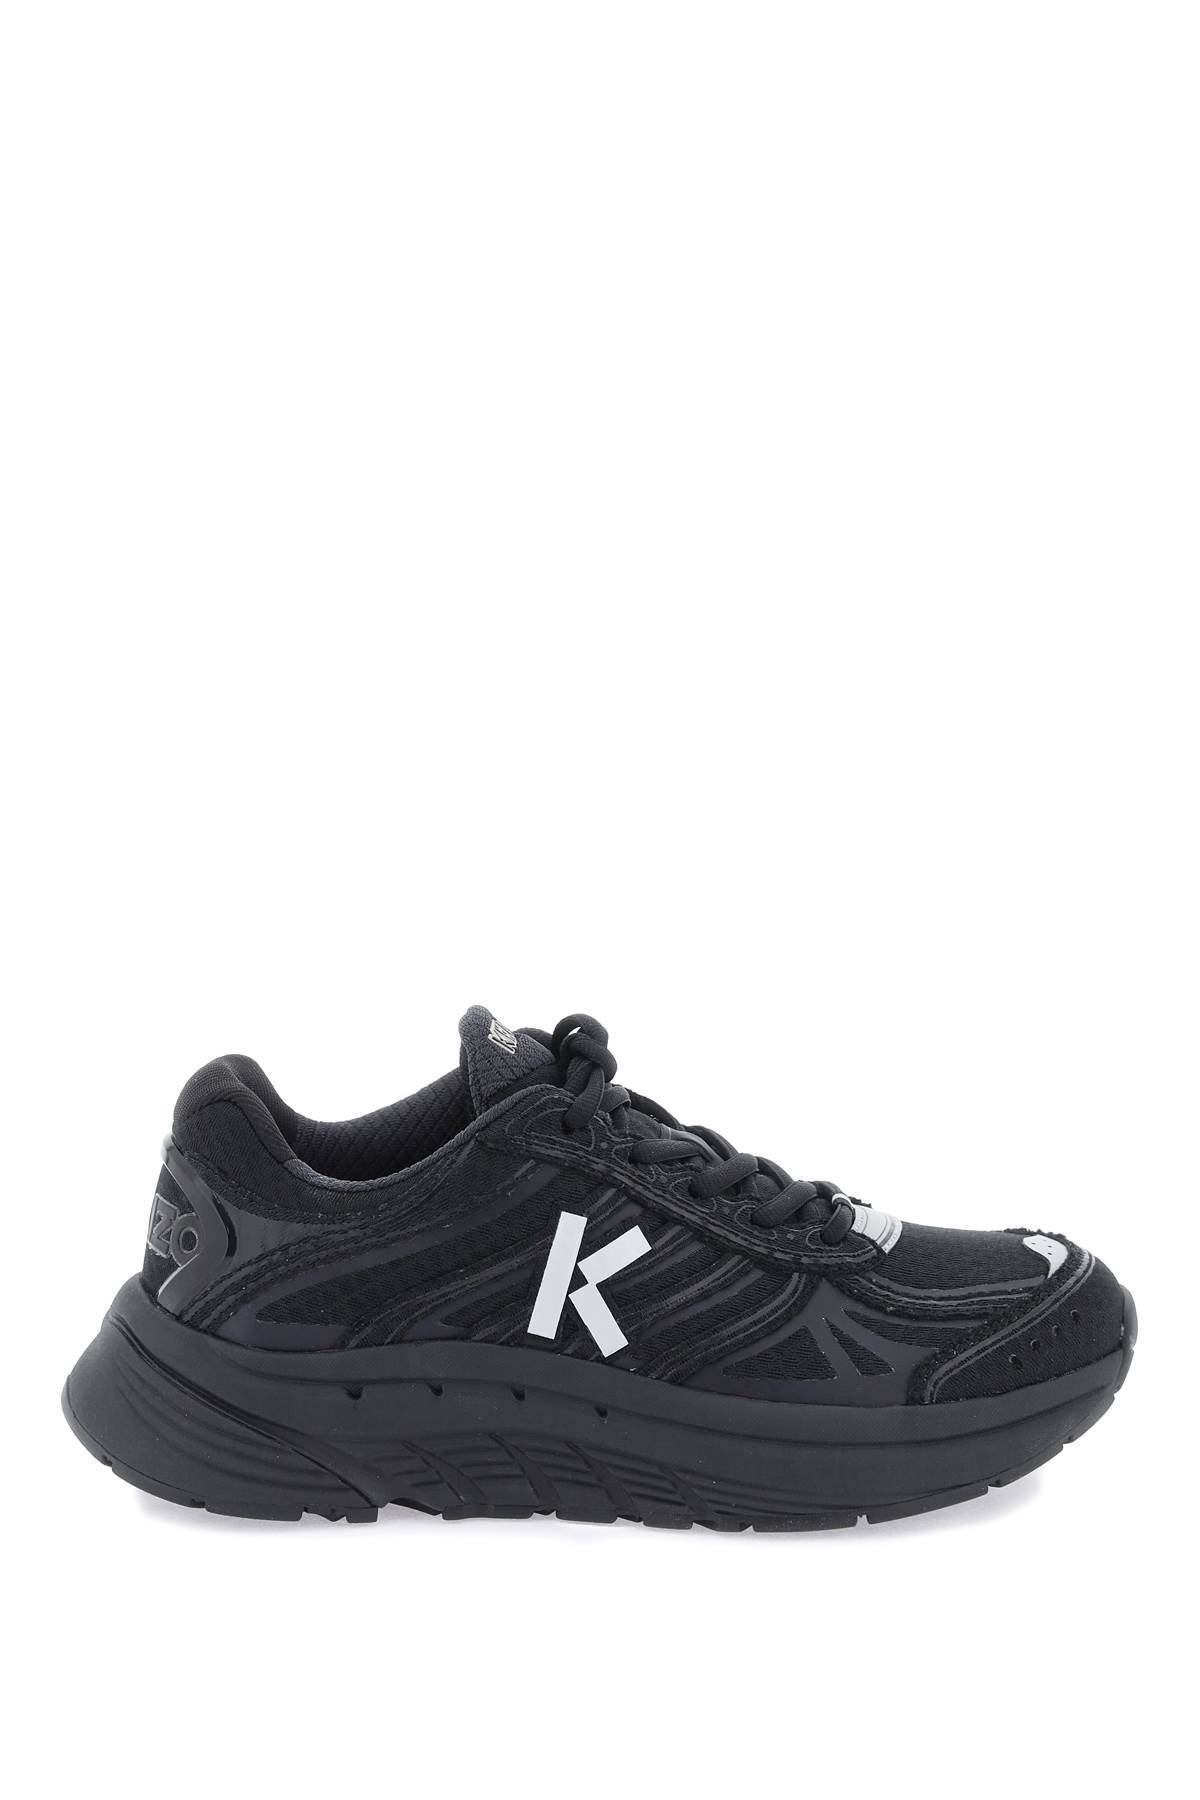 Kenzo KENZO kenzo-pace sneakers